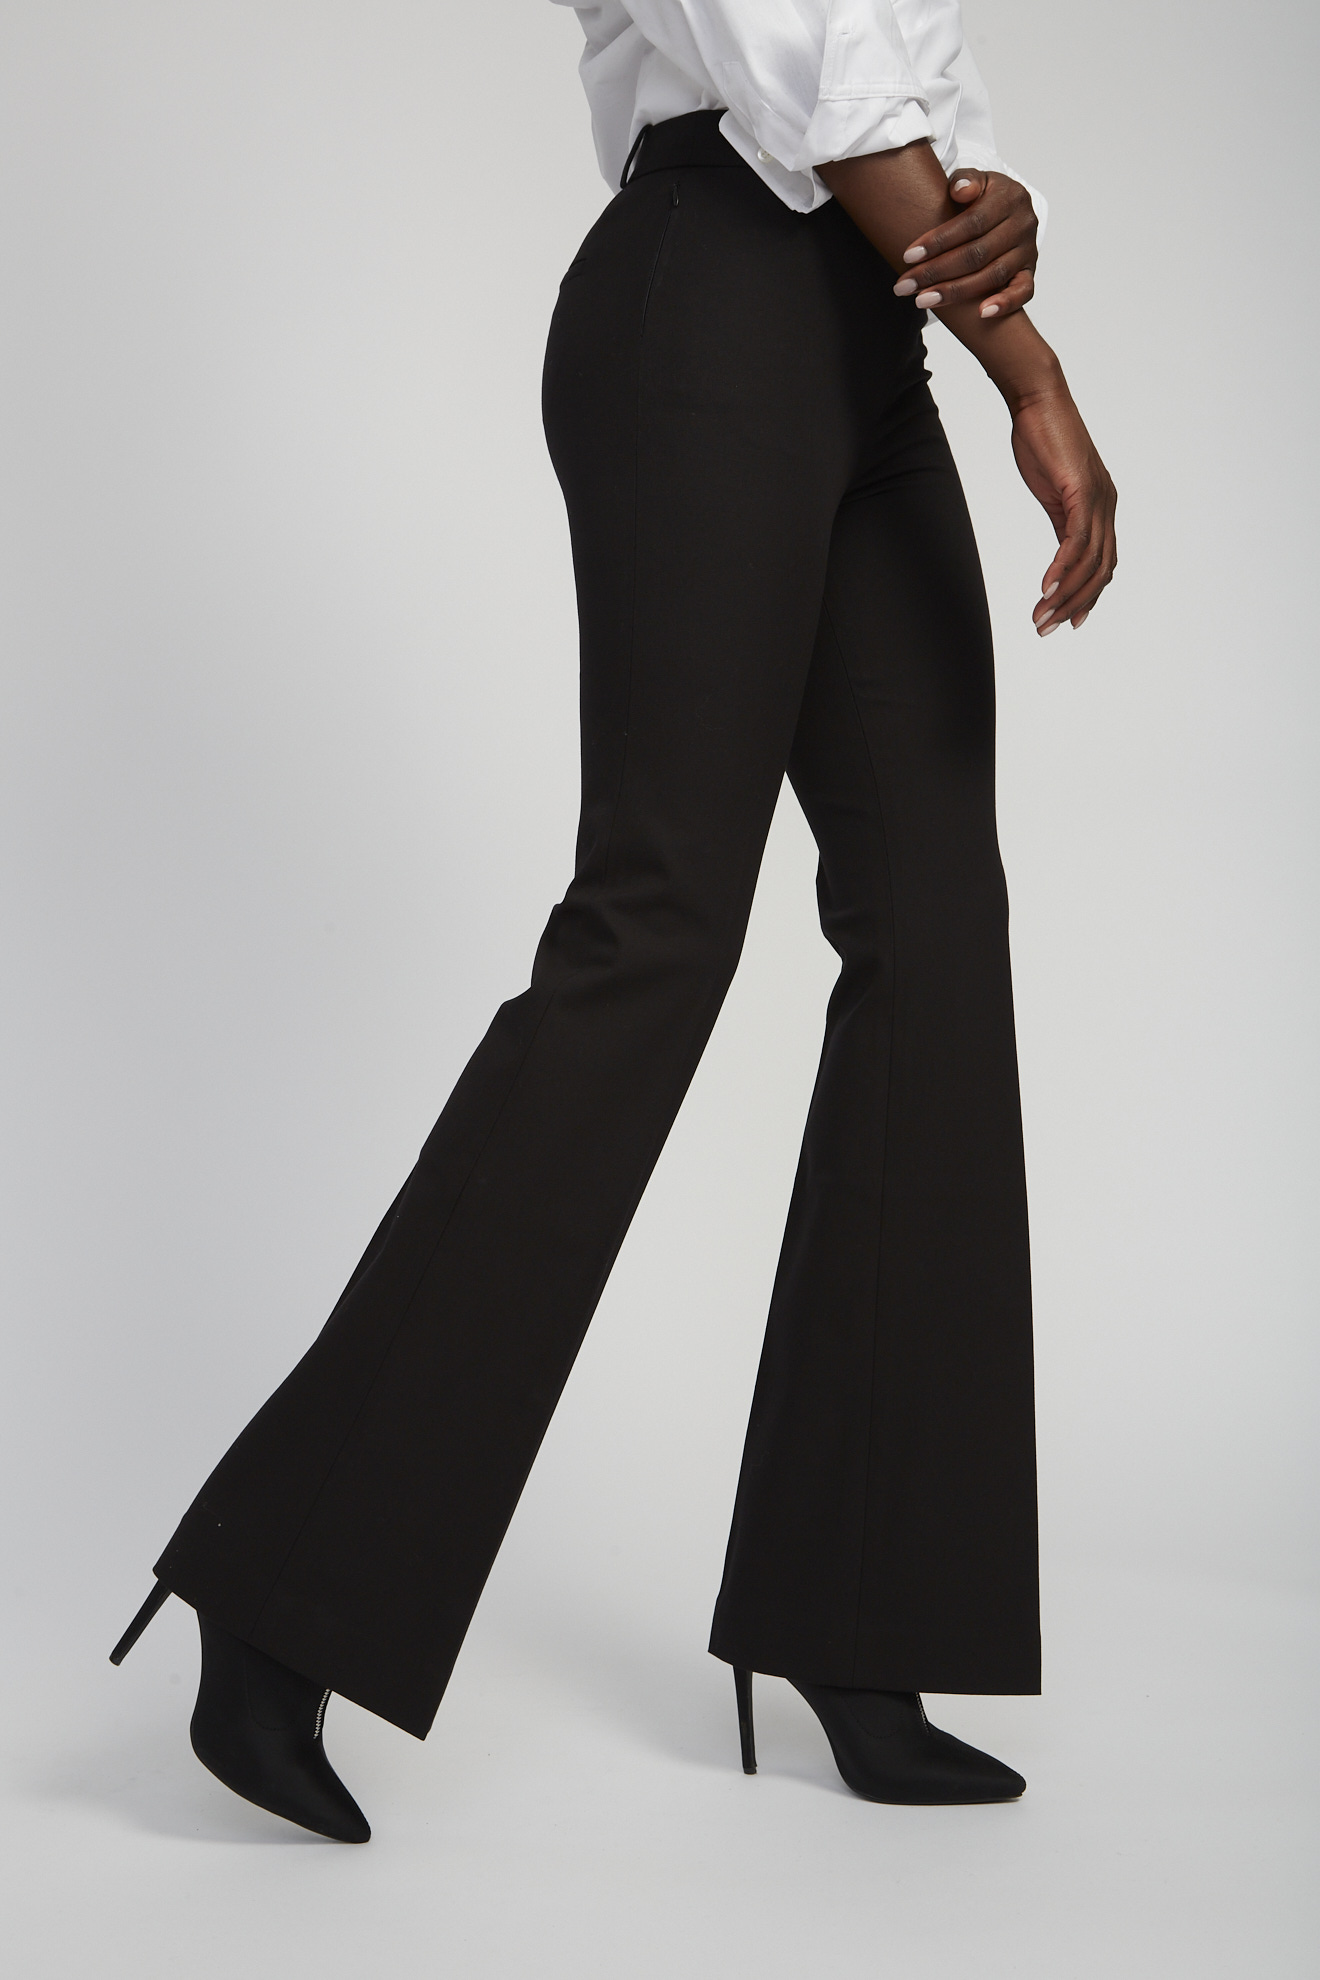 frame pants black plain jeans model side